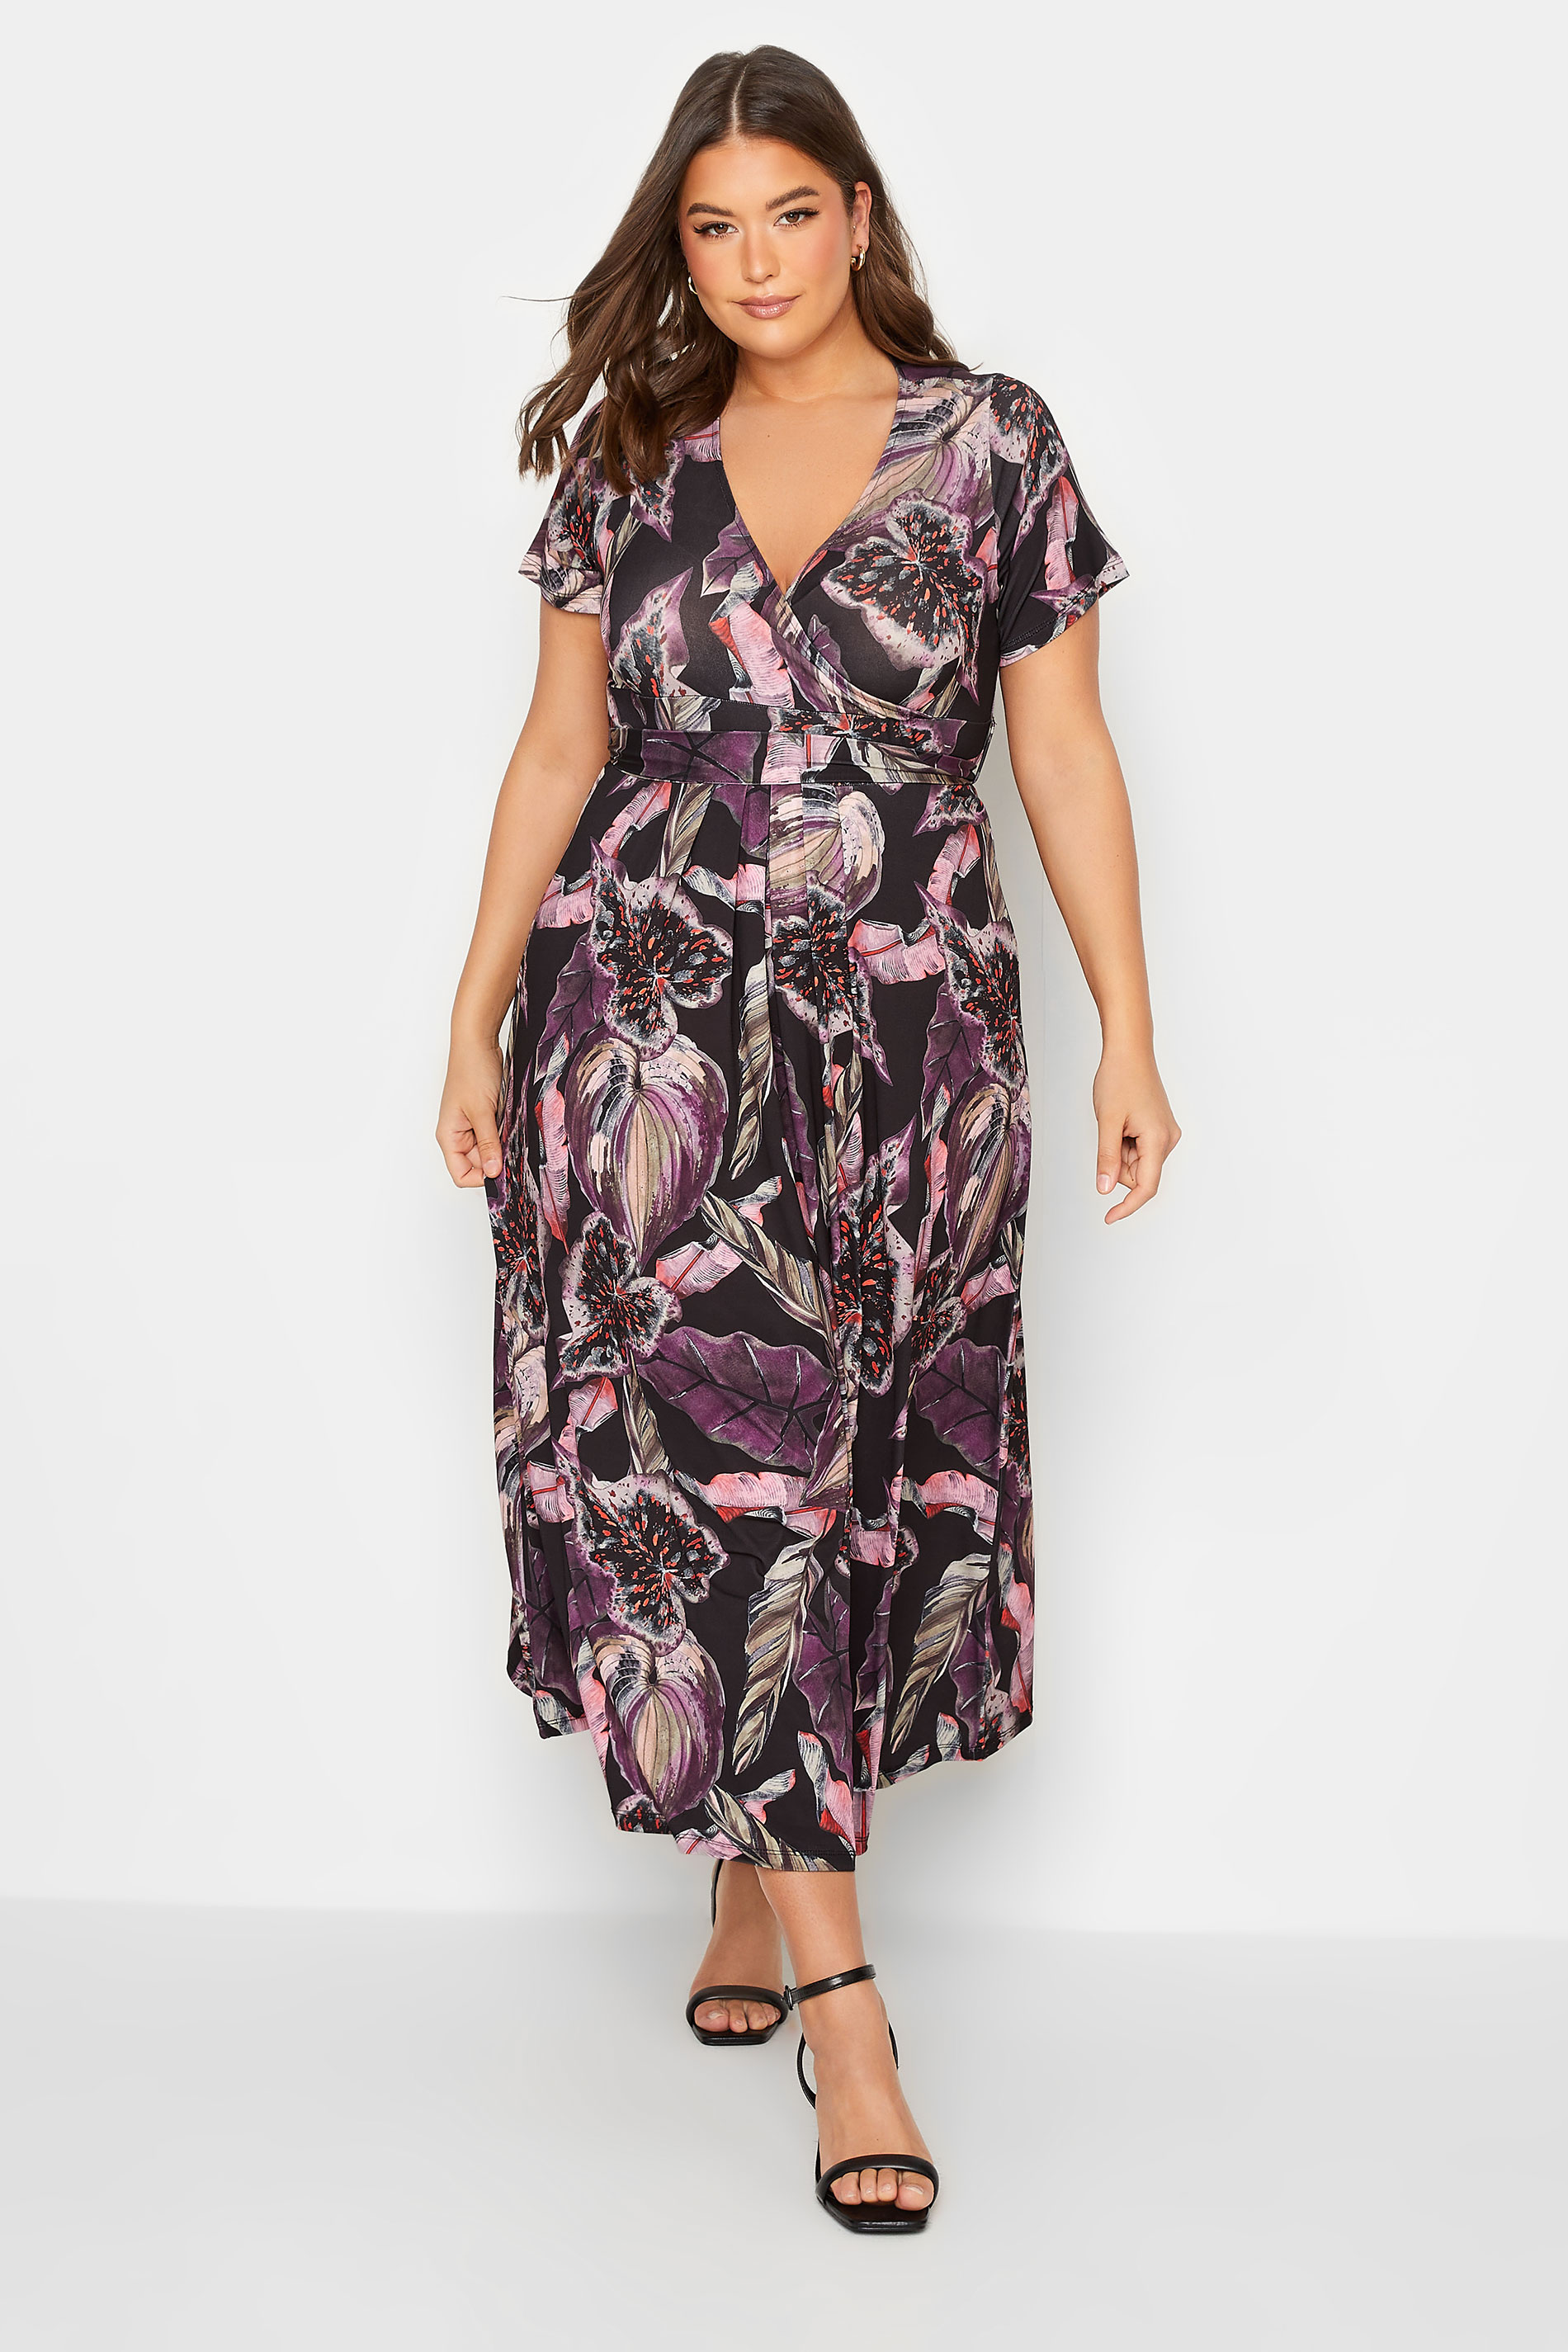 YOURS Curve Plus Size Black Leaf Print Wrap Dress | Yours Clothing  1